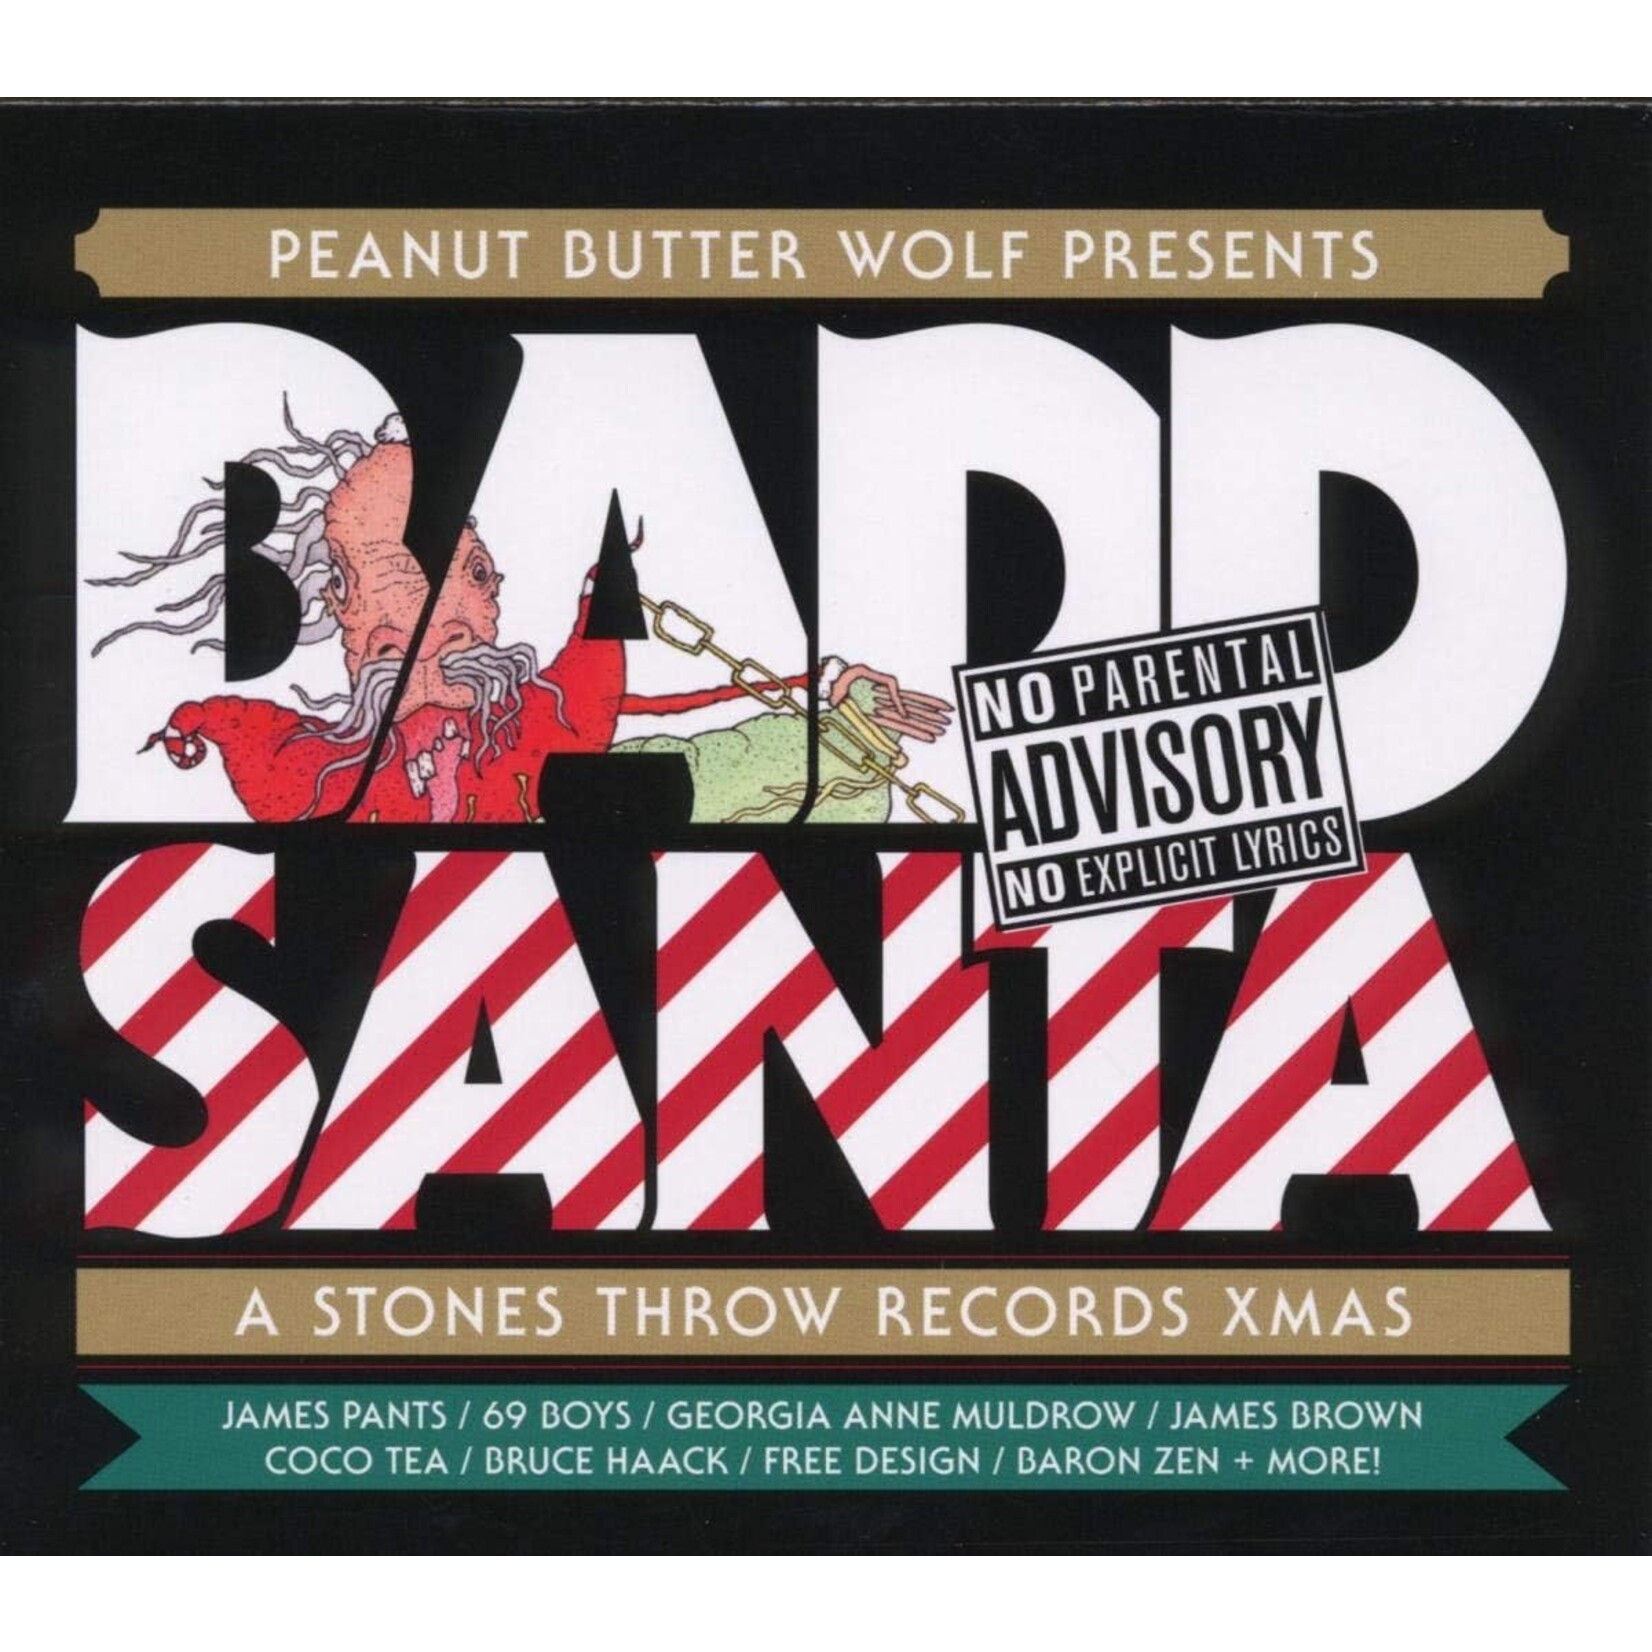 Peanut Butter Wolf - Presents Badd Santa: A Stones Throw Records Xmas [USED CD]